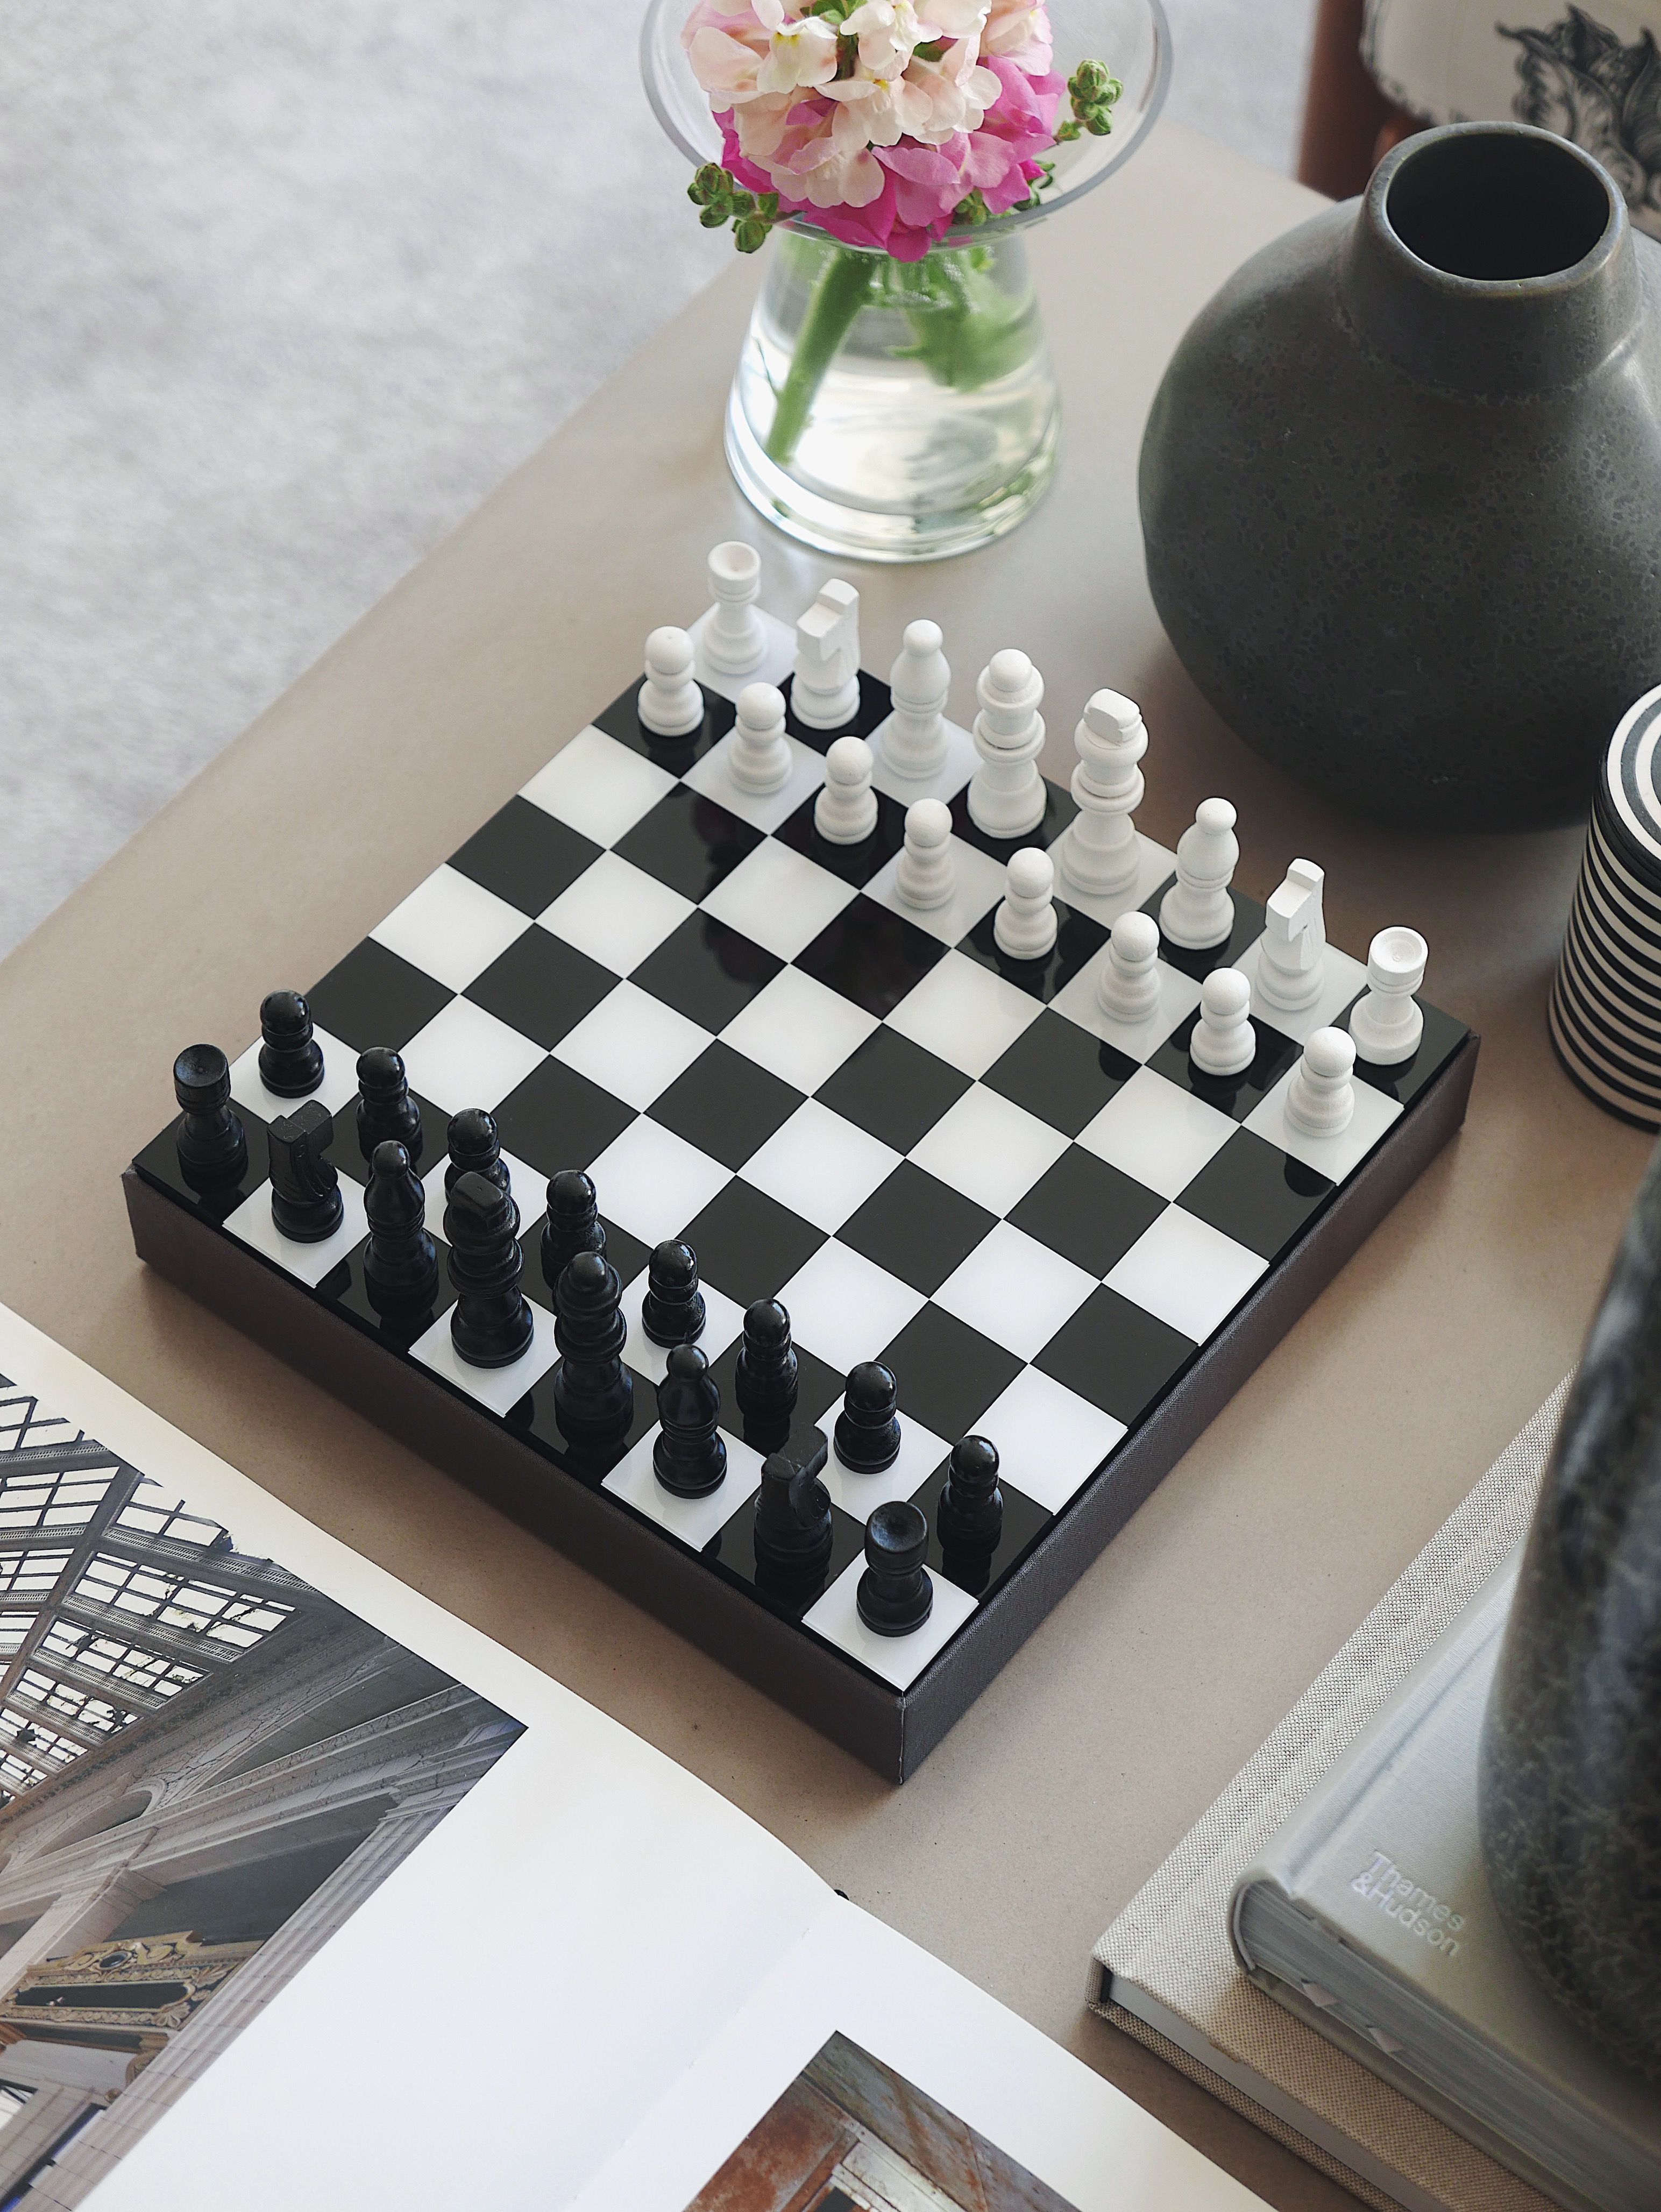 PW_Art_of_Chess